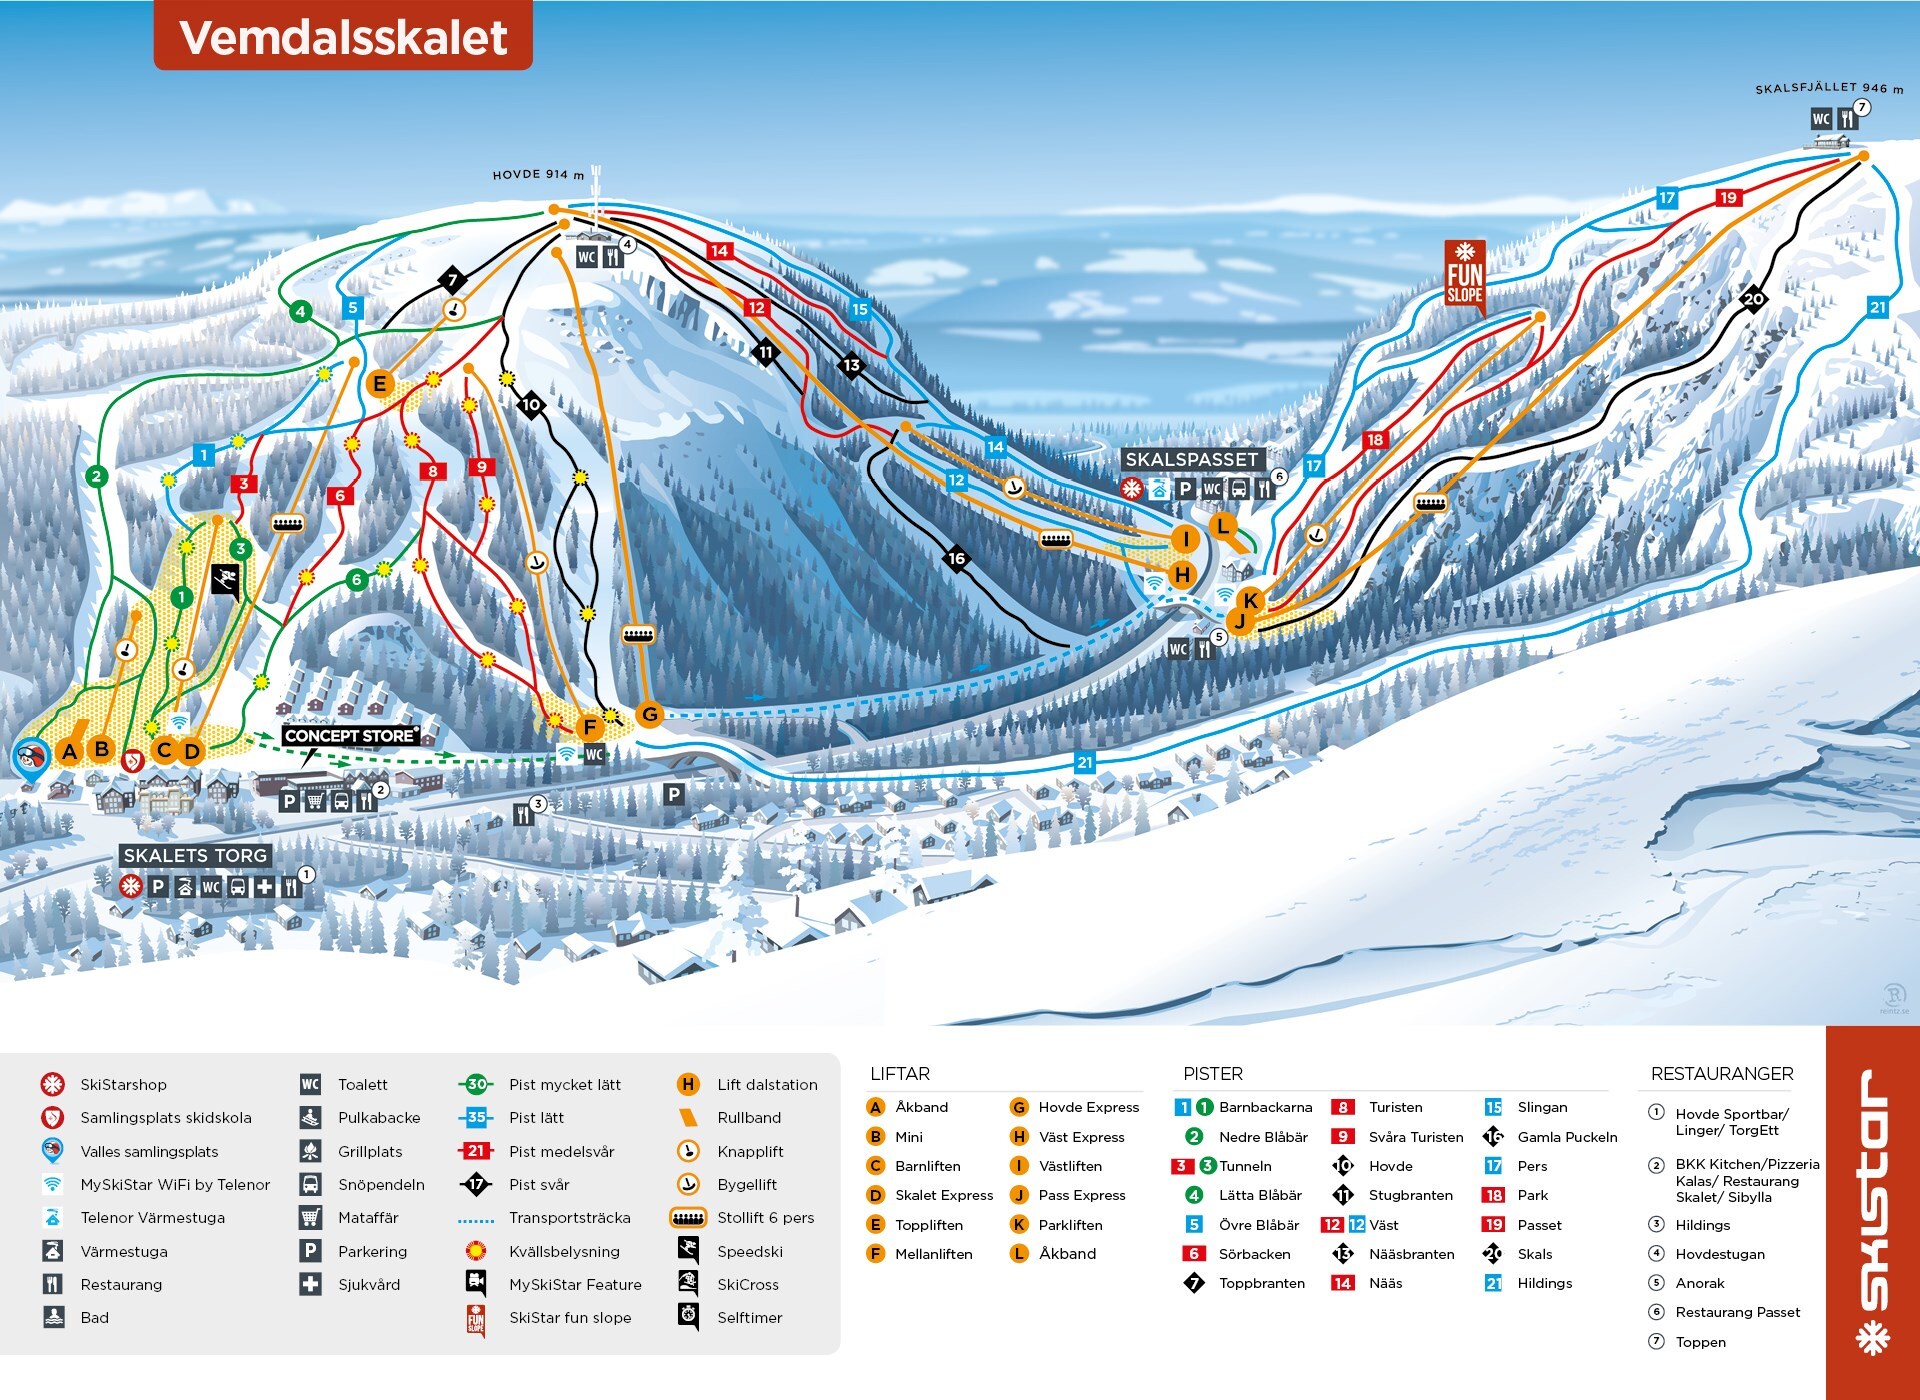 Vemdalen Ski Resort Guide, Location Map & Vemdalen ski holiday